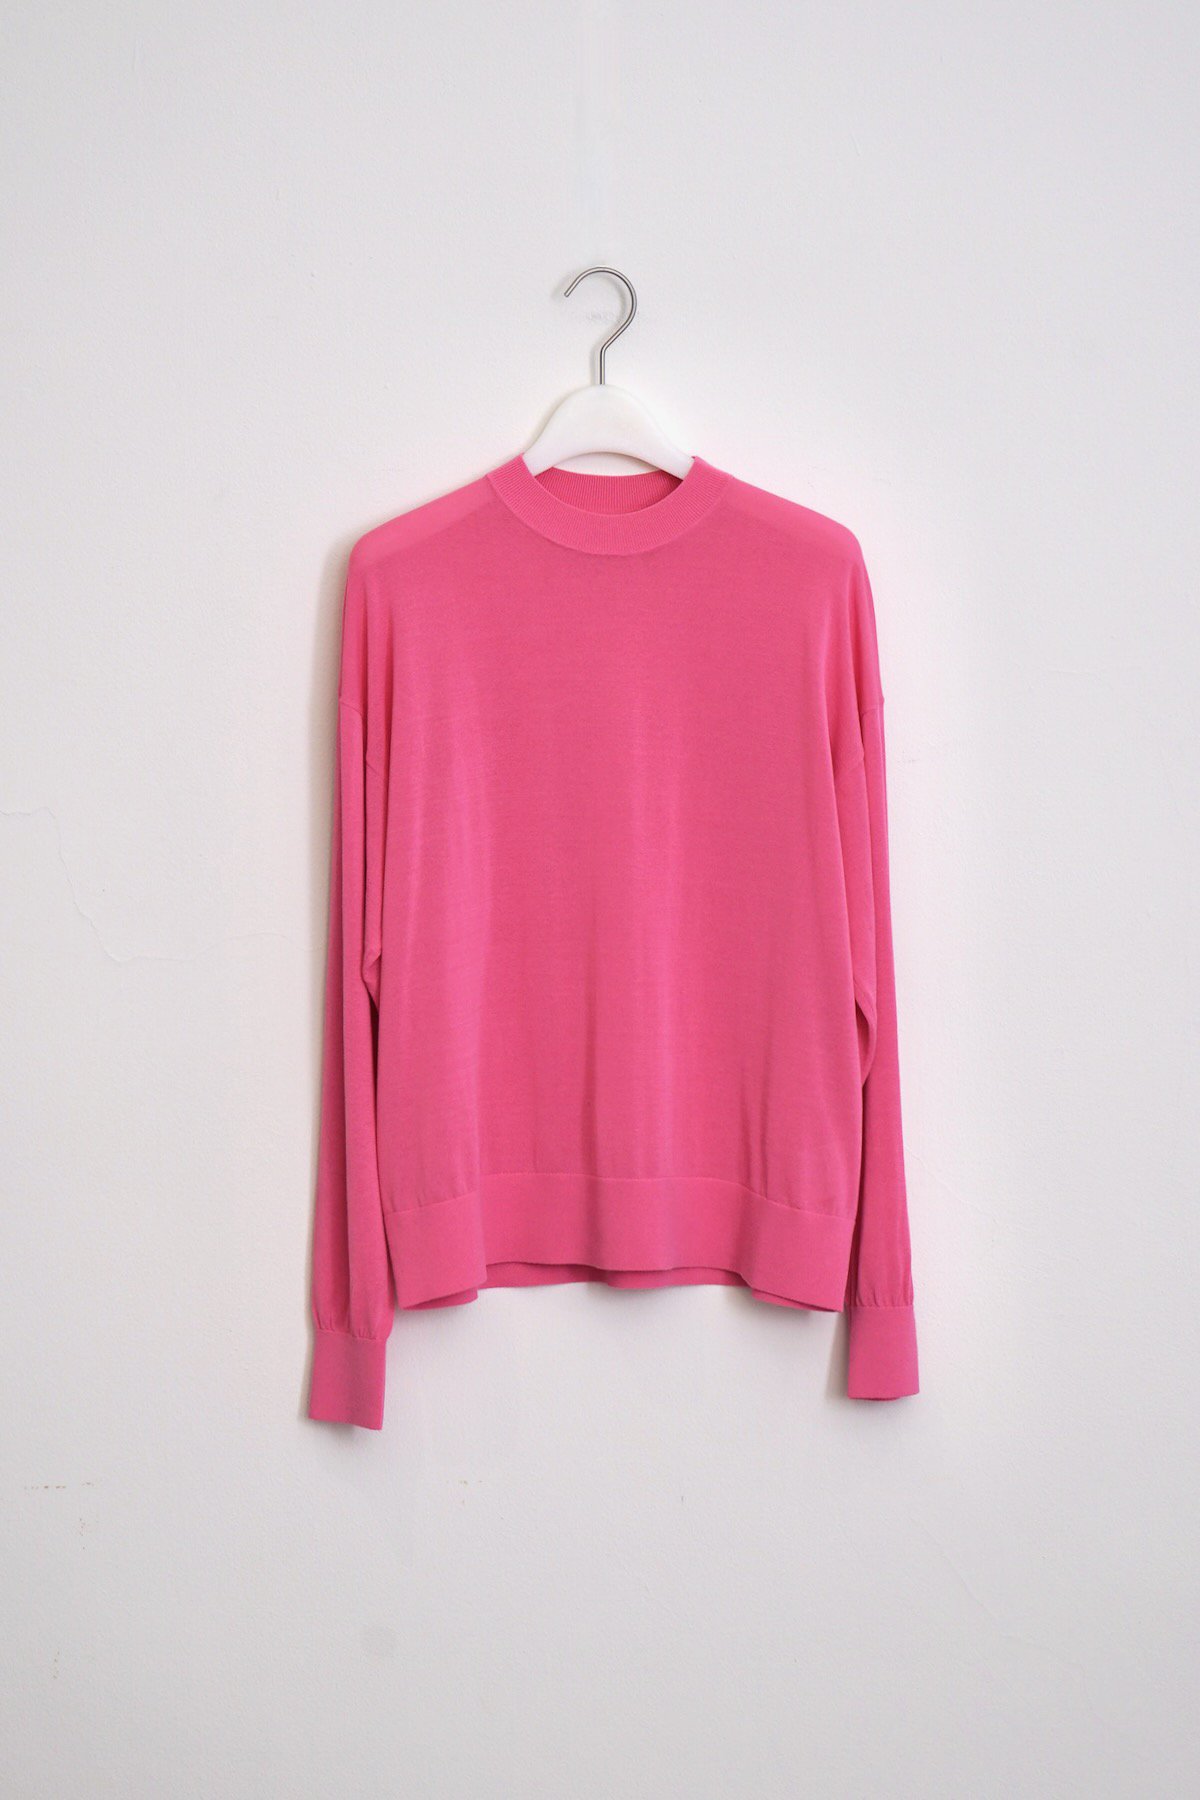 KLOKE / Aurum Sheer Sweater / Pink